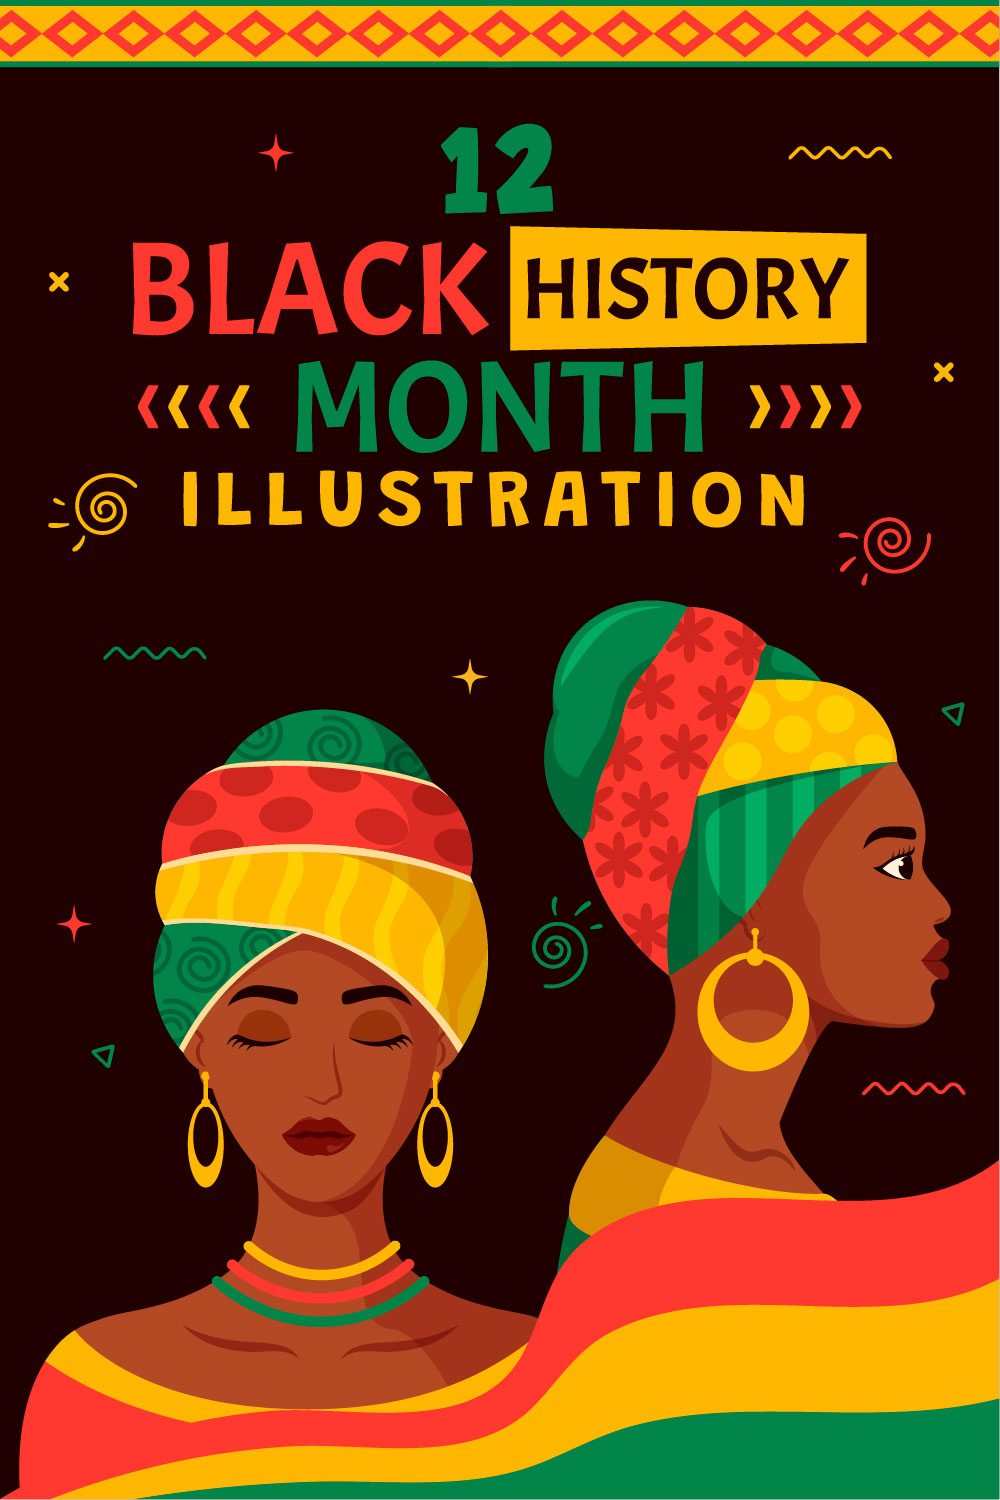 12 Black History Month Illustration pinterest preview image.